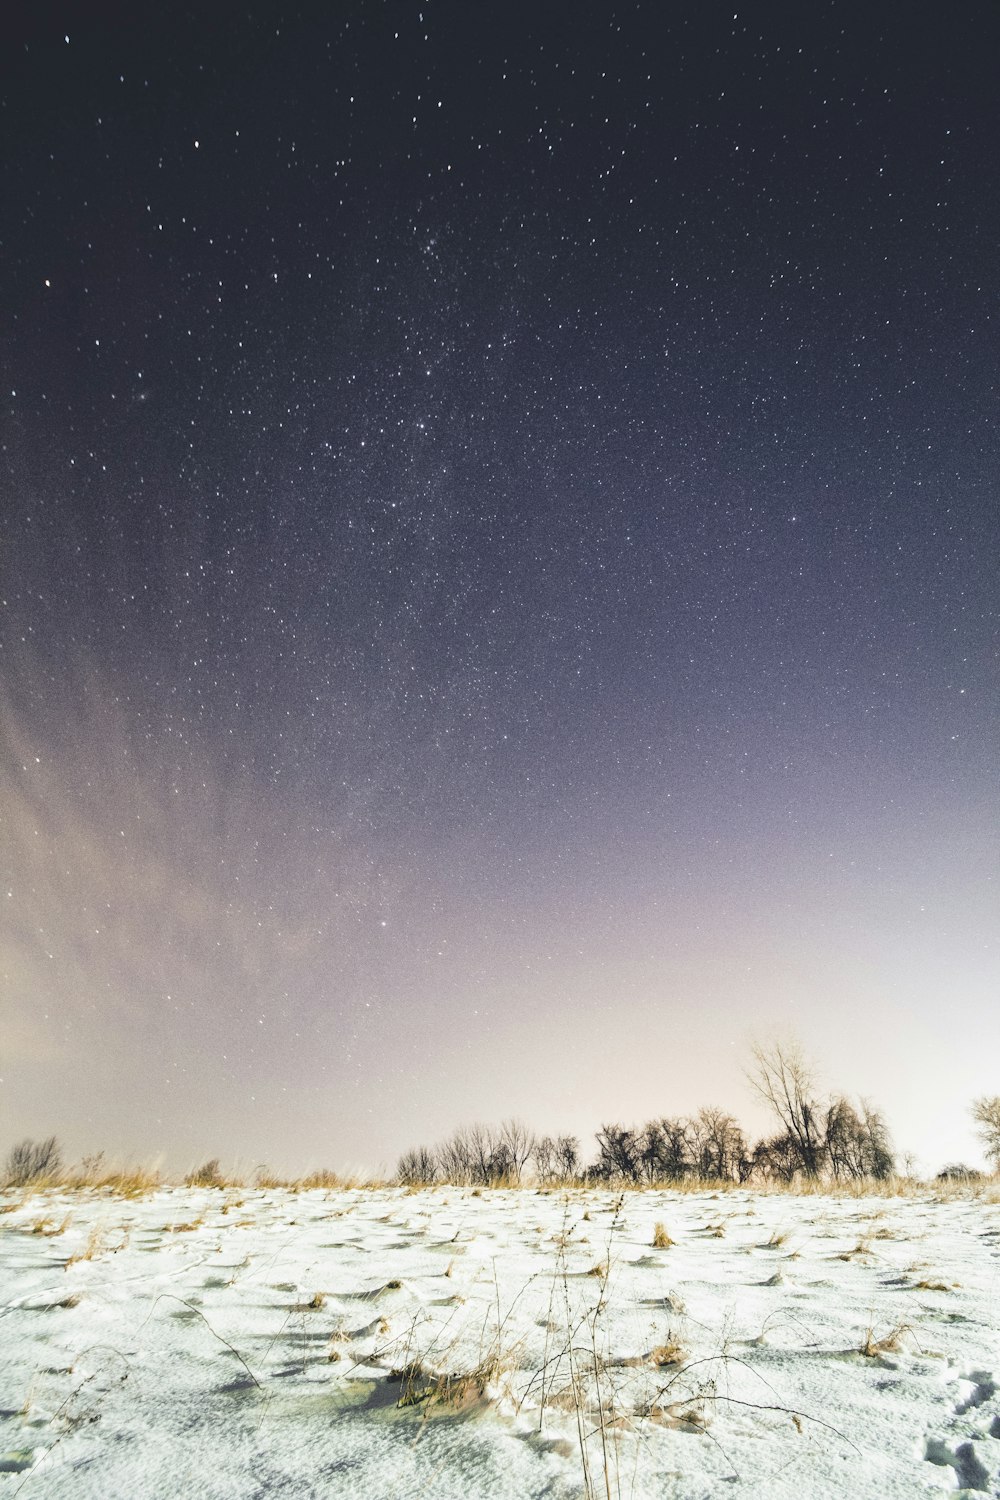 snow-covered ground under sky full of stars